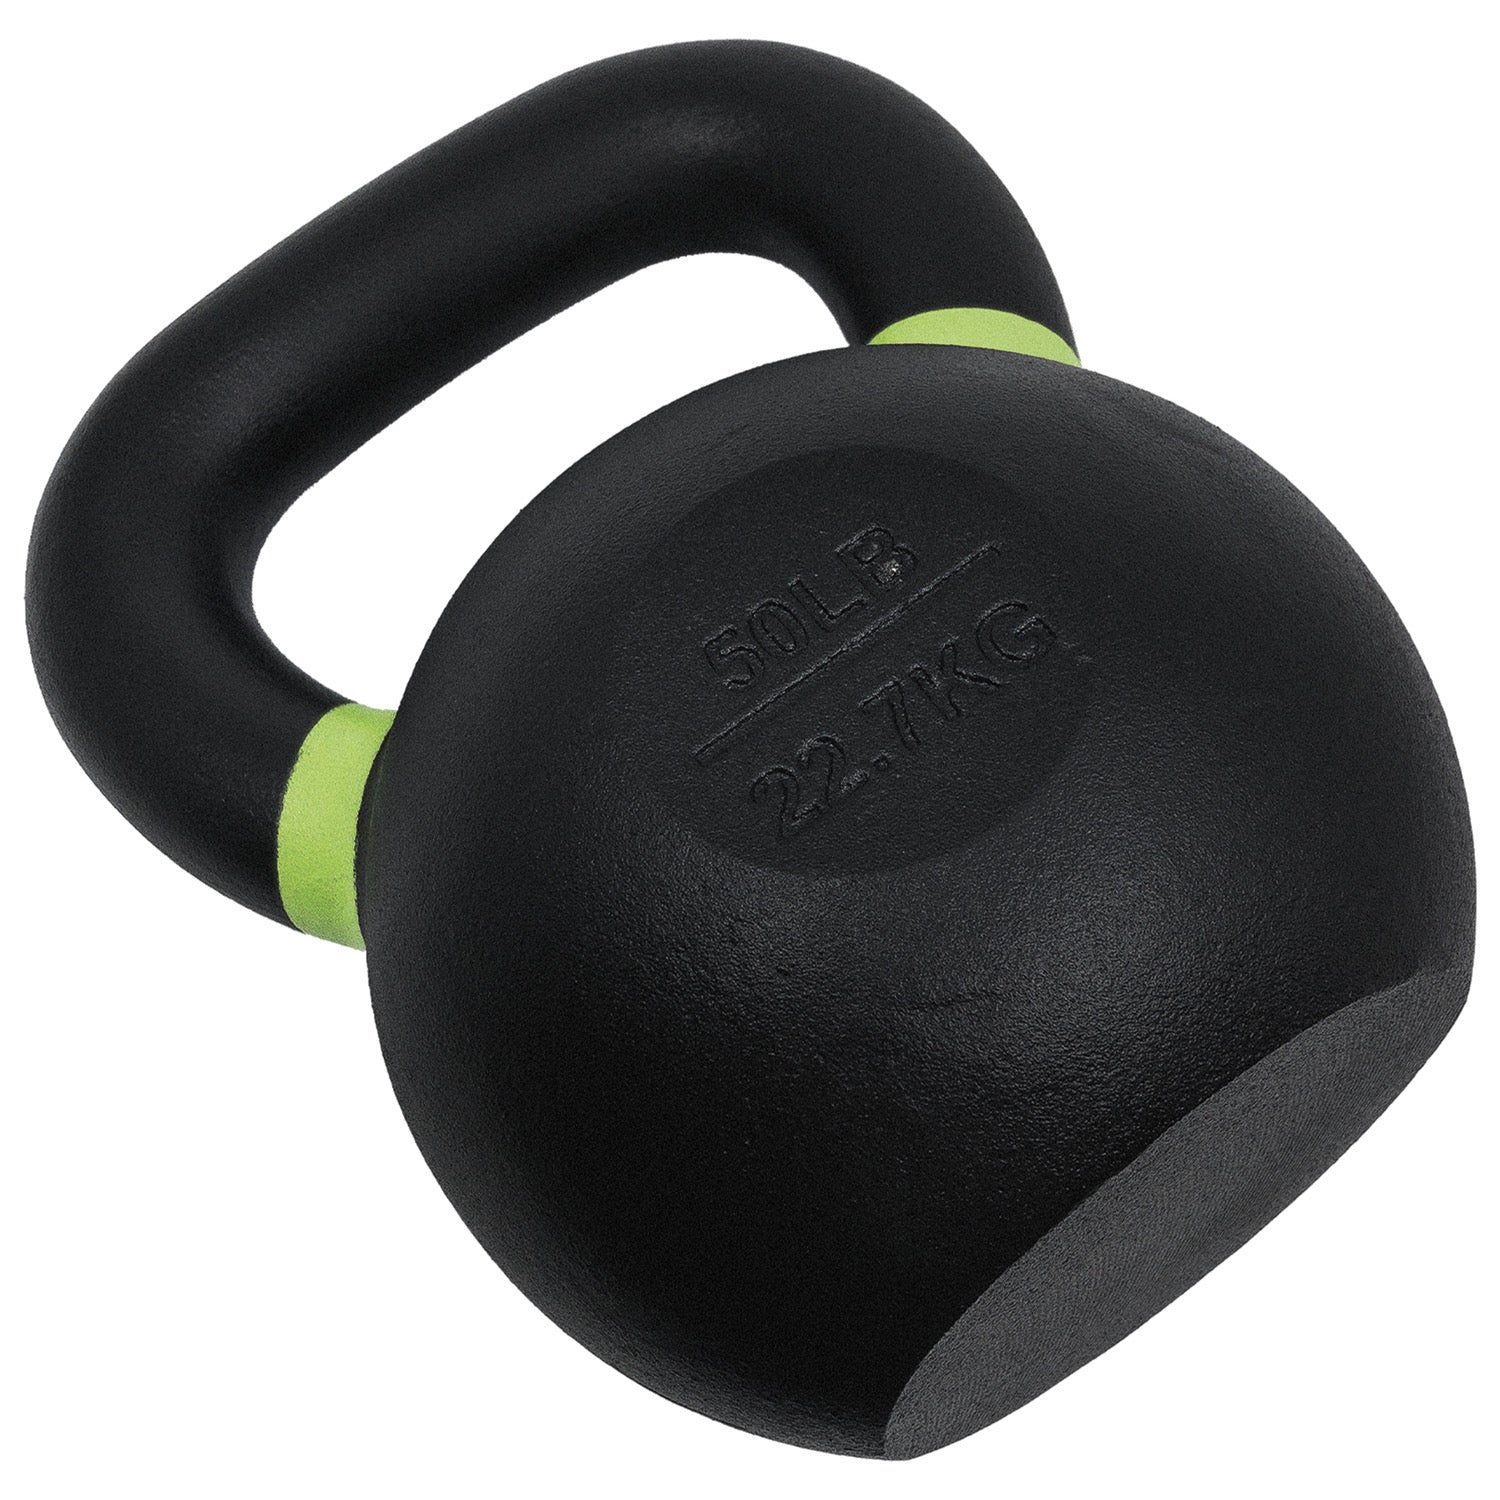 RHINO Fitness® Iron Kettlebell Series 50 lb RHINO Fitness fitness kettlebell Resistance Training